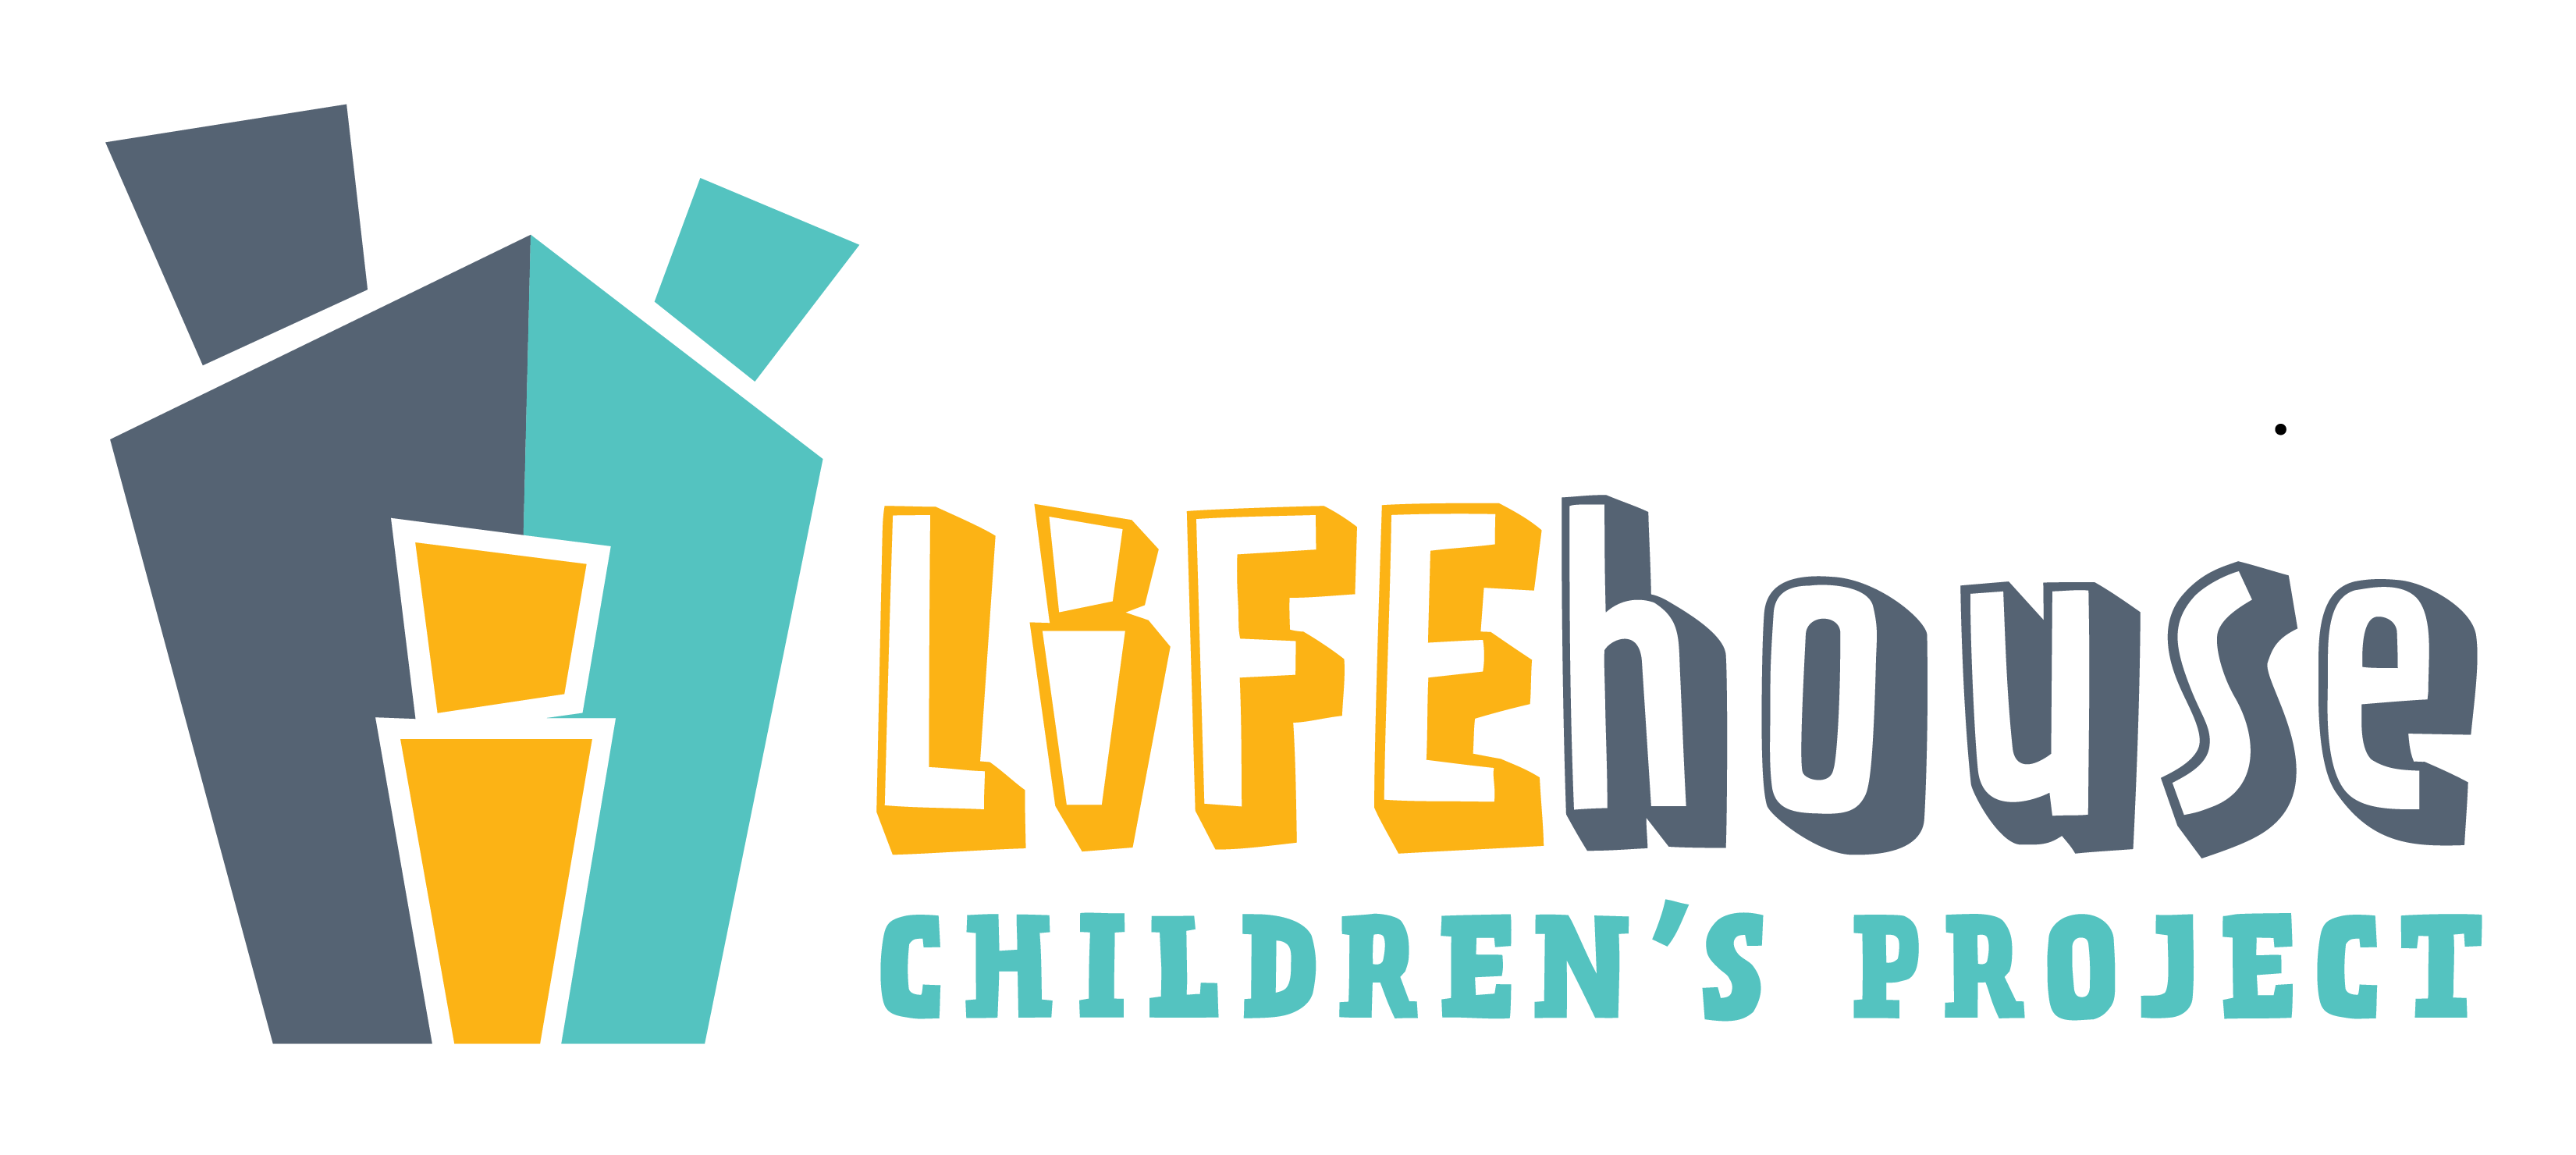 LIFEhouse Children's Project